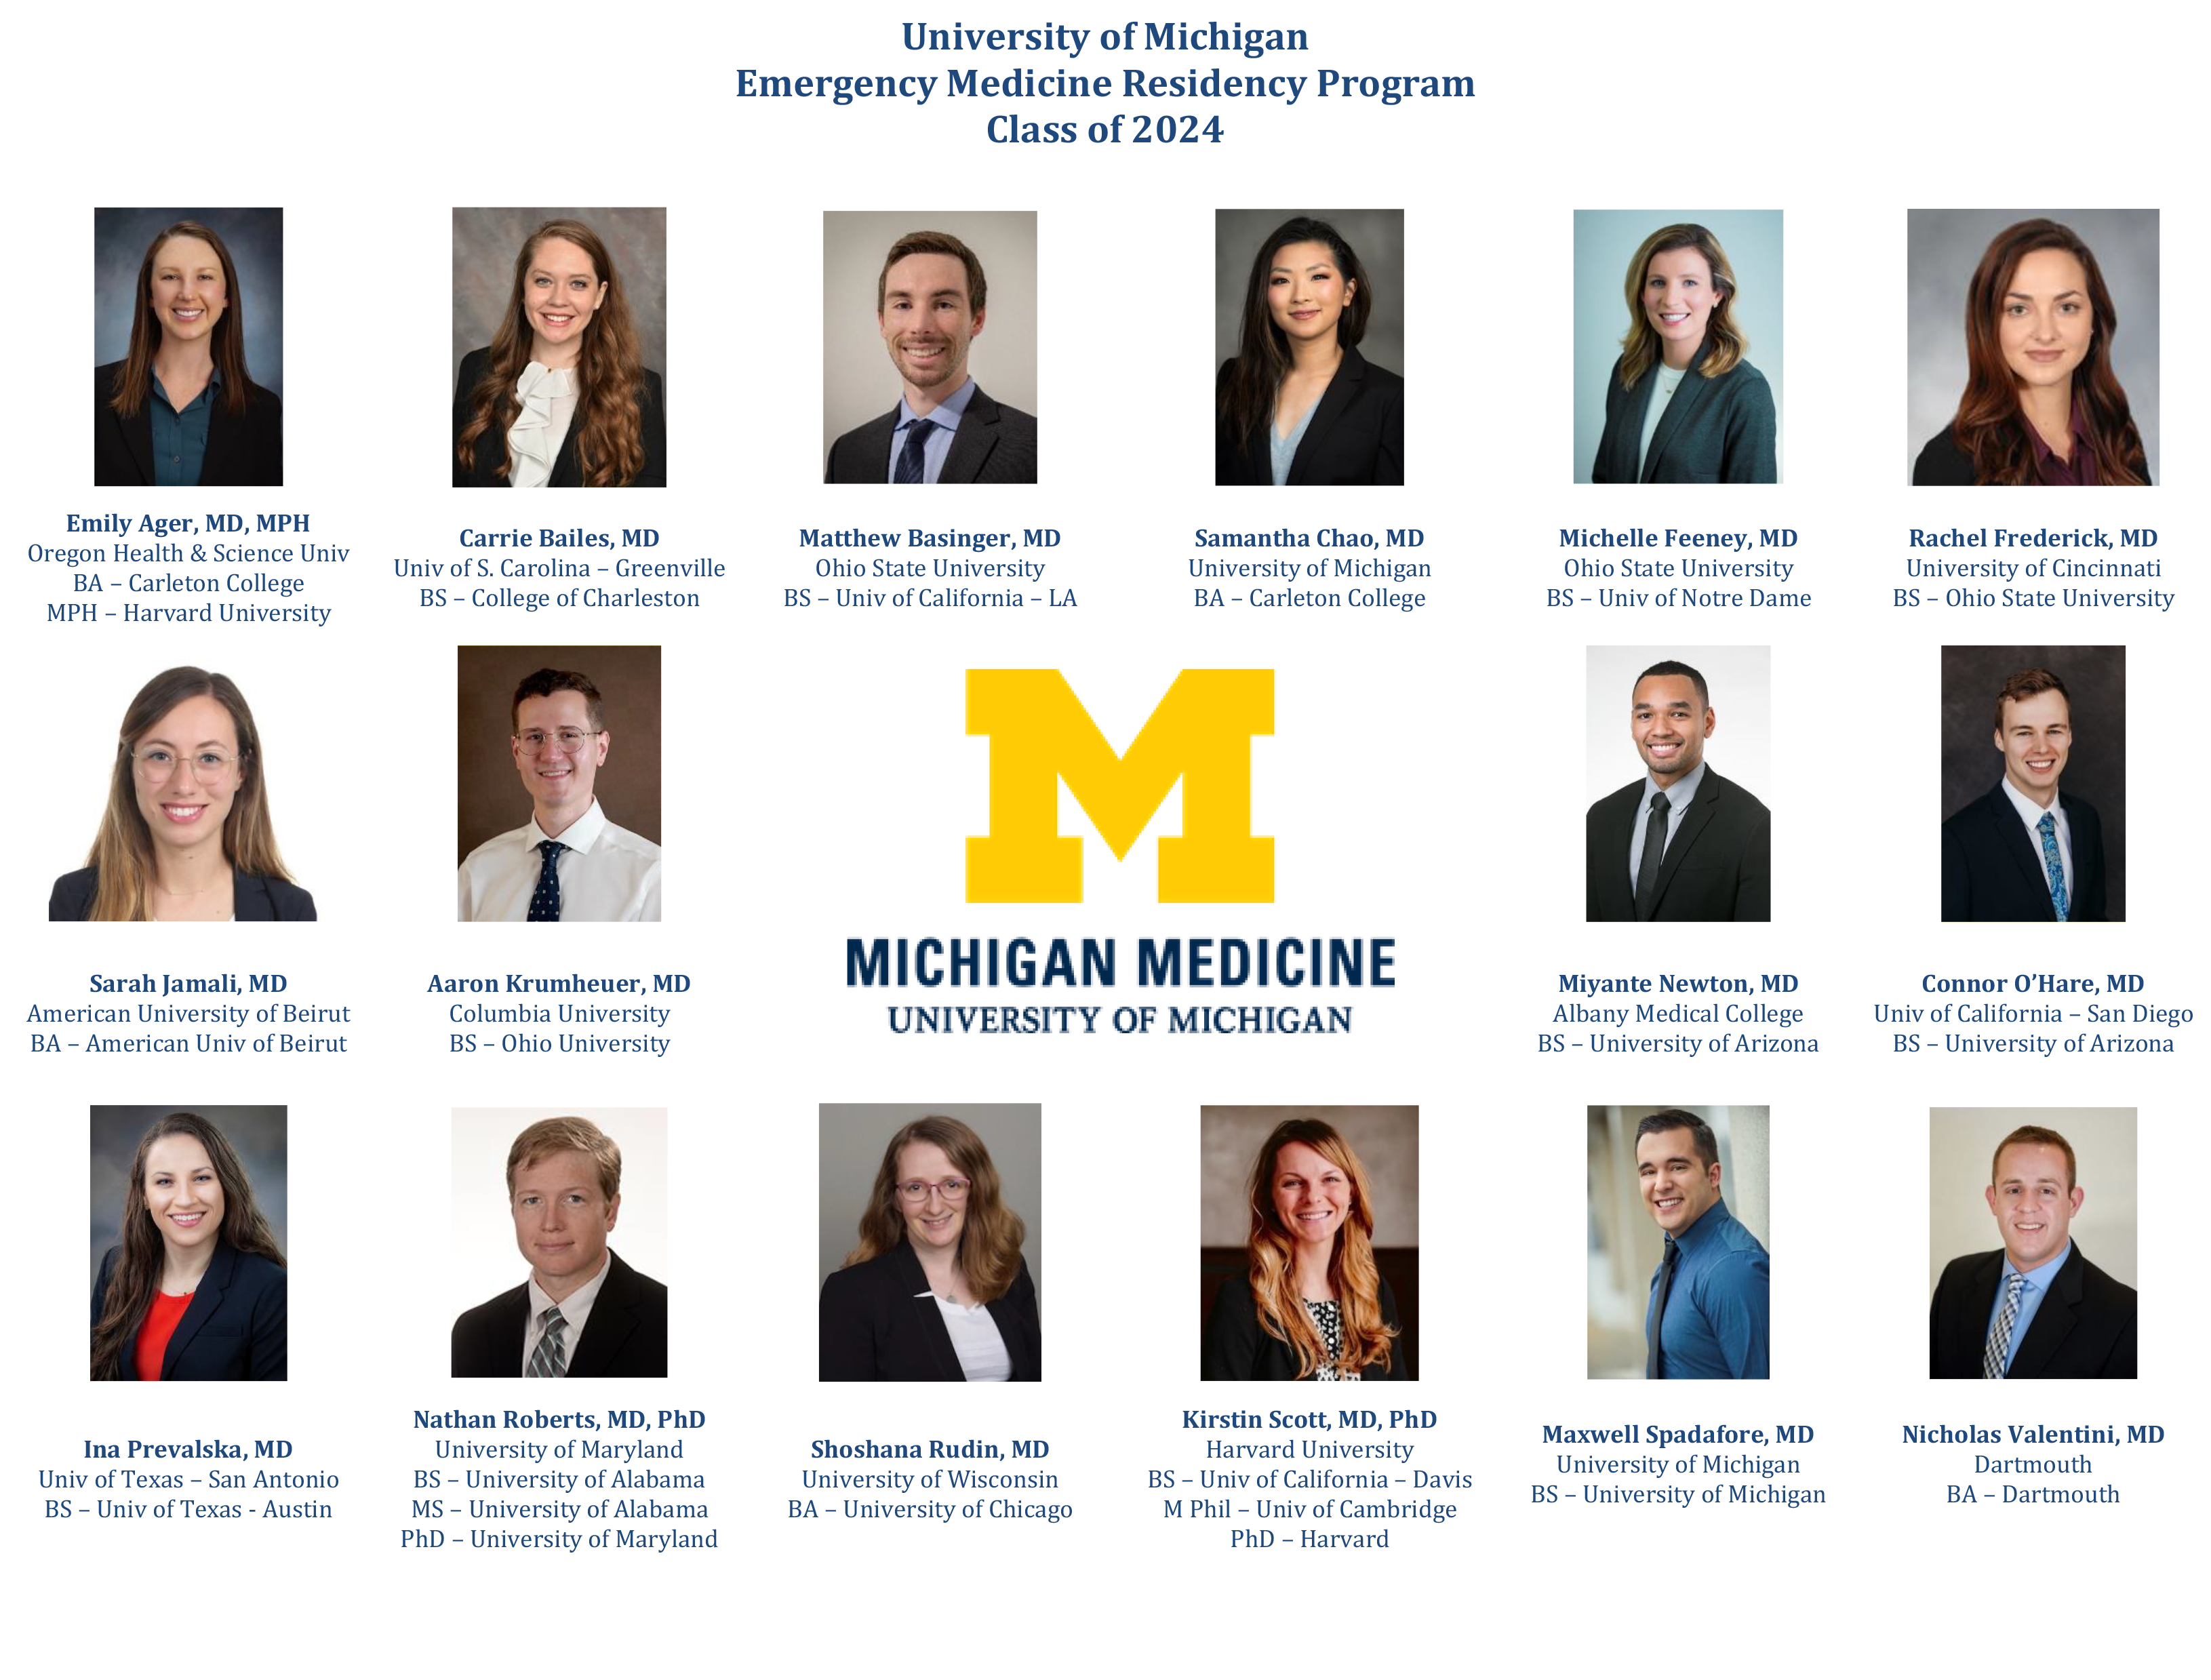 Meet the Class of 2024 Emergency Medicine Michigan Medicine